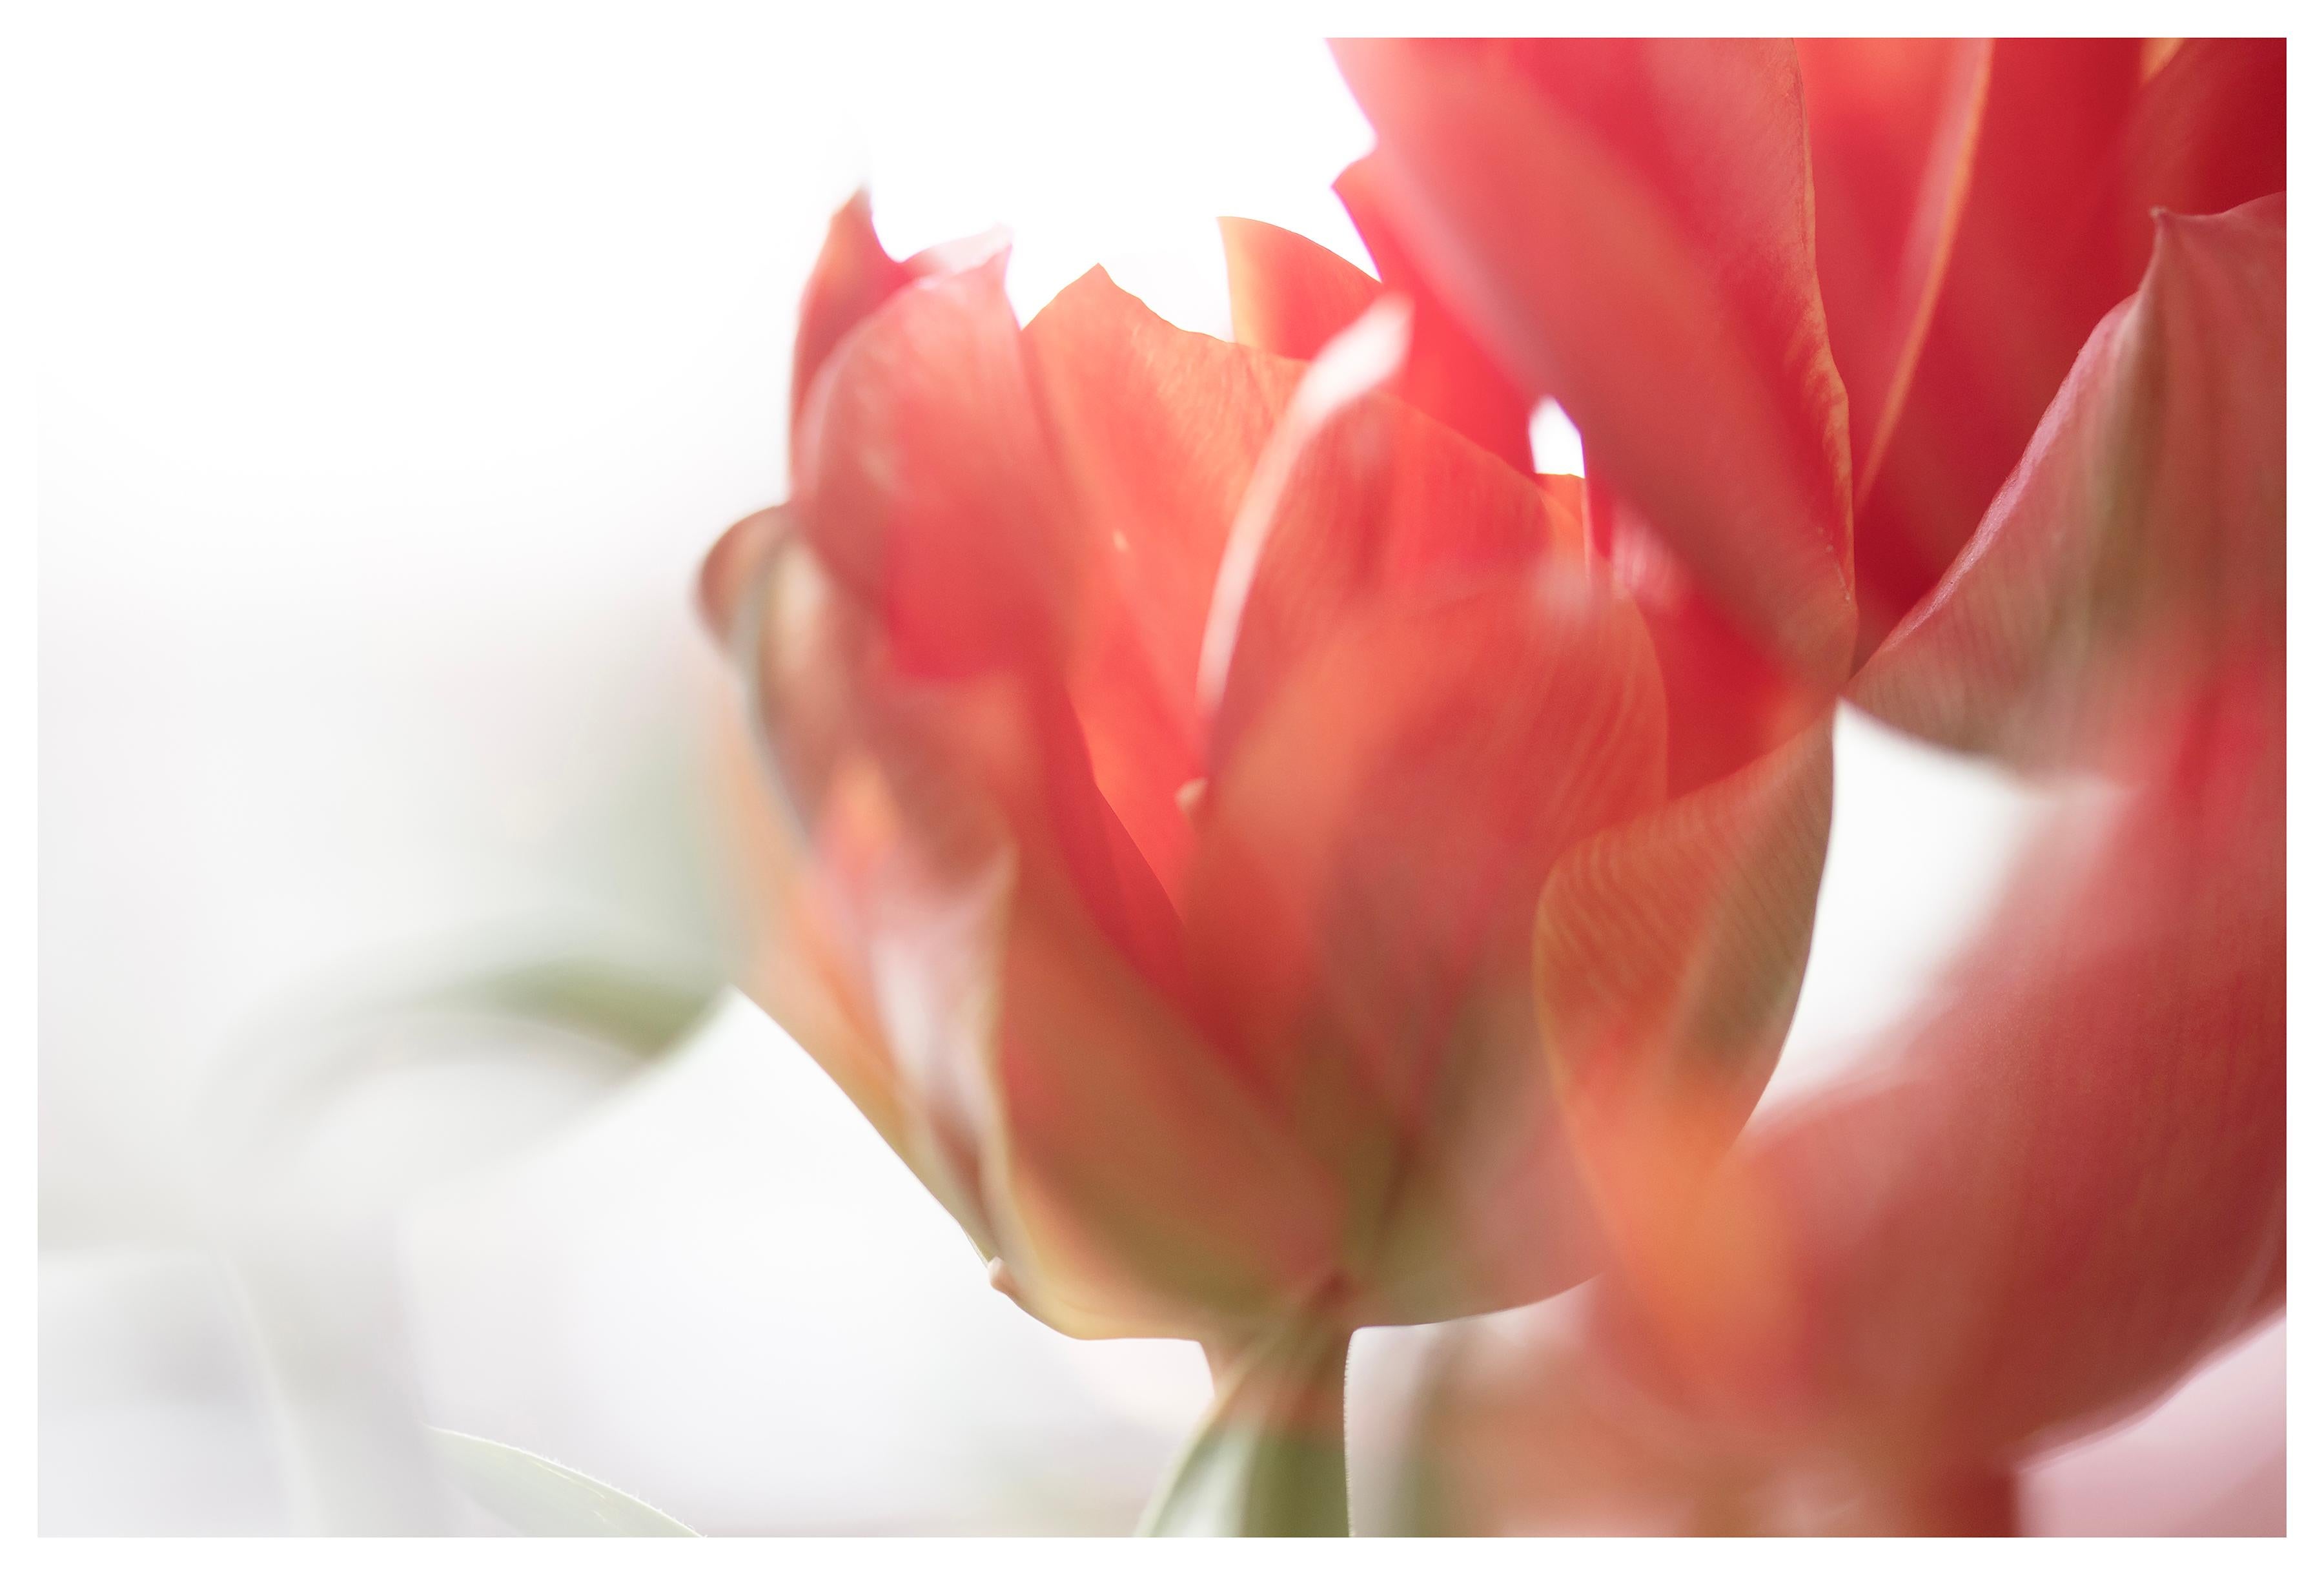 Abstract Photograph Sophia Milligan - « Sunday's Tulips (II) » Grande échelle Photo audacieuse fleur pastel rouge orange blanc